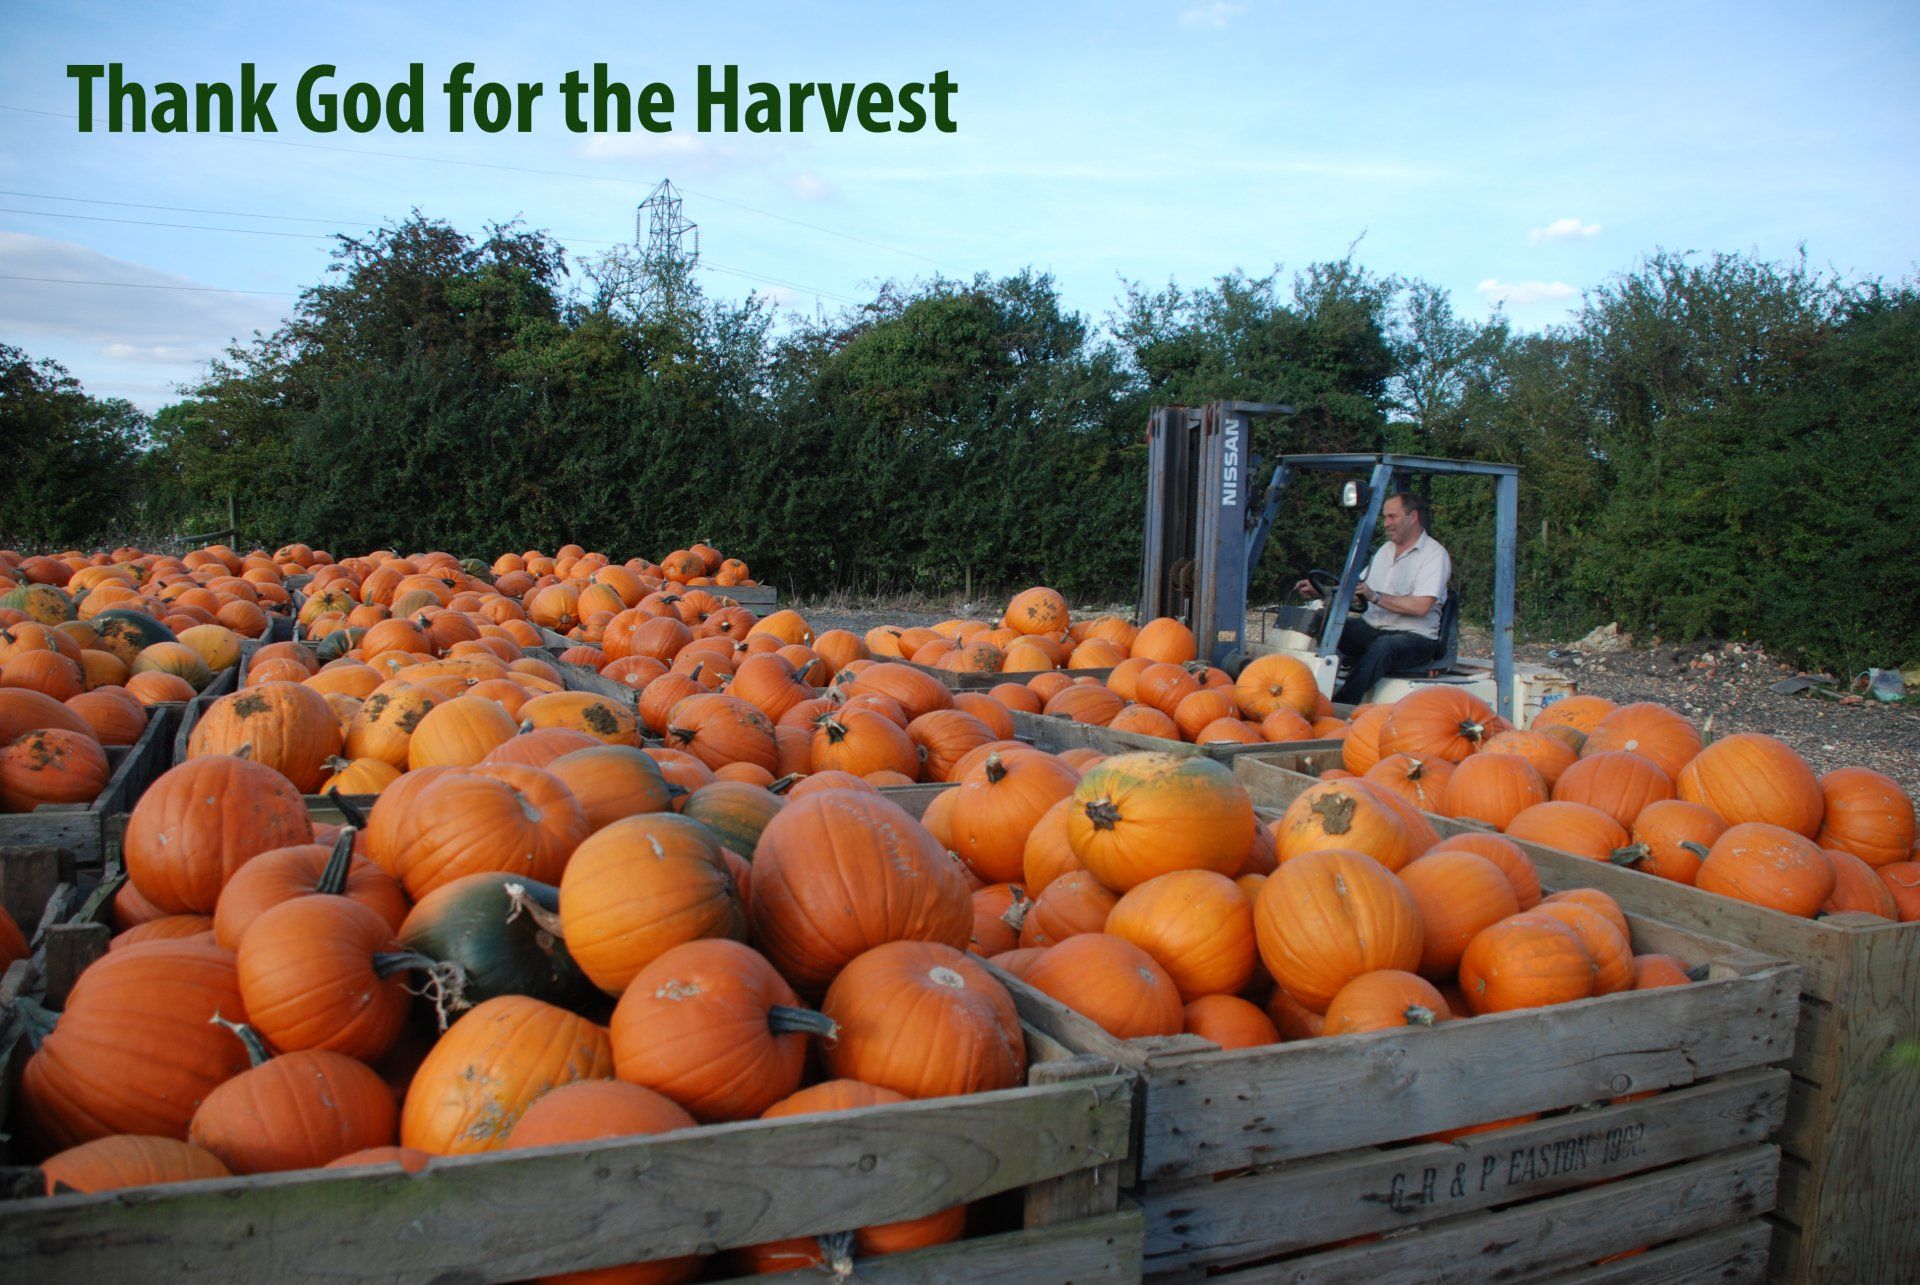 Harvest photo at Pells Farm, Bedford